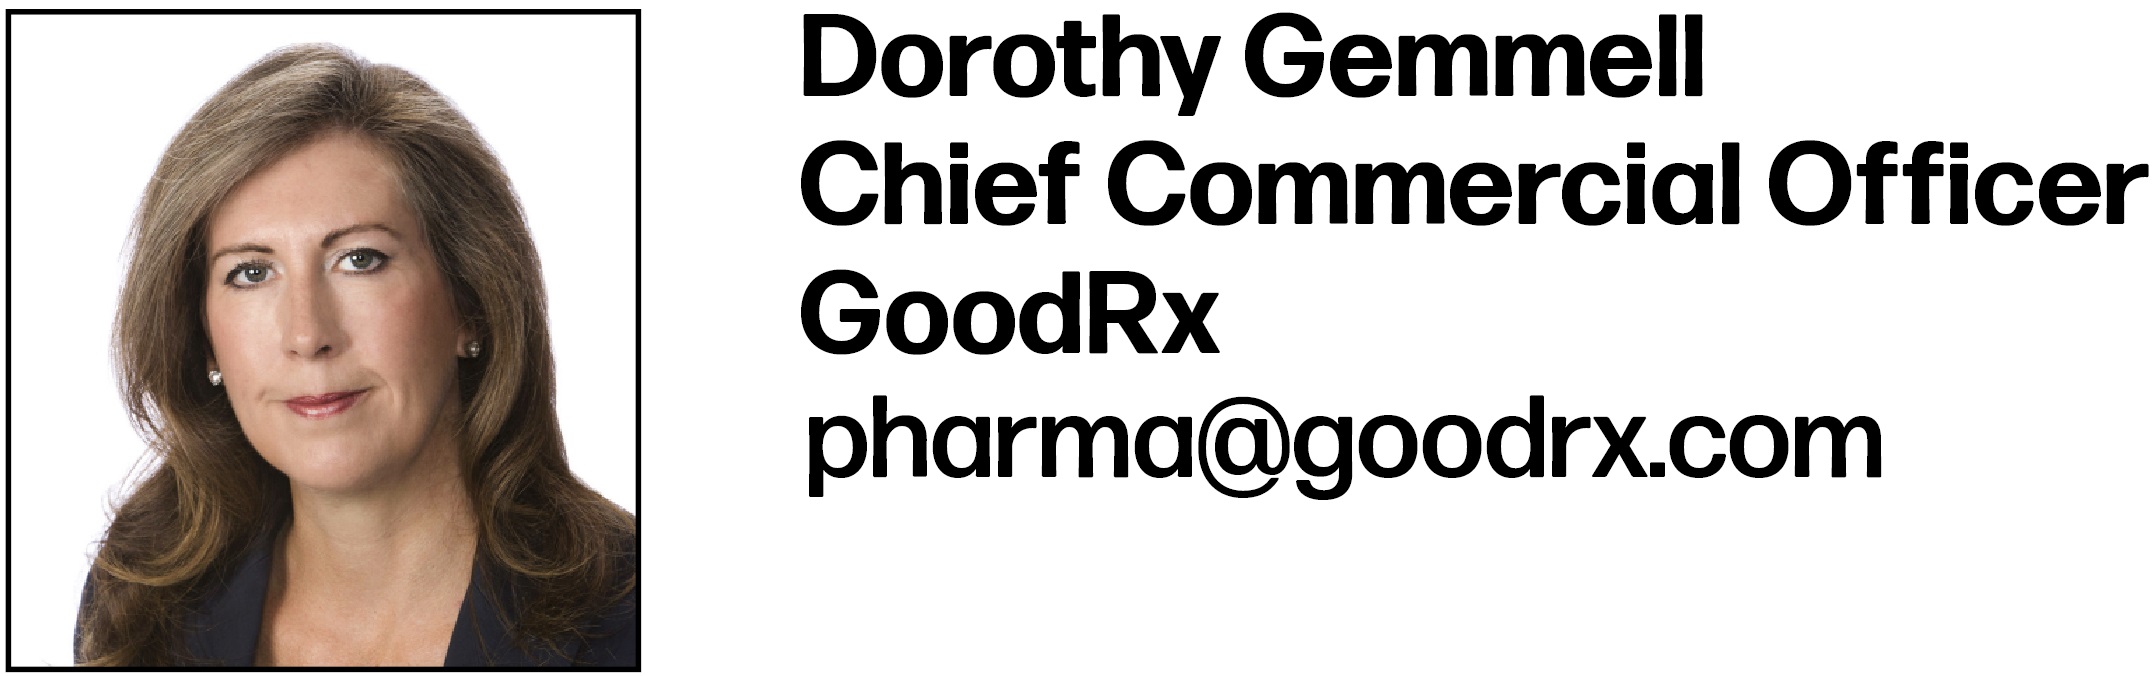 Dorothy Gemmell Chief Commercial Officer GoodRx pharma@goodrx.com 